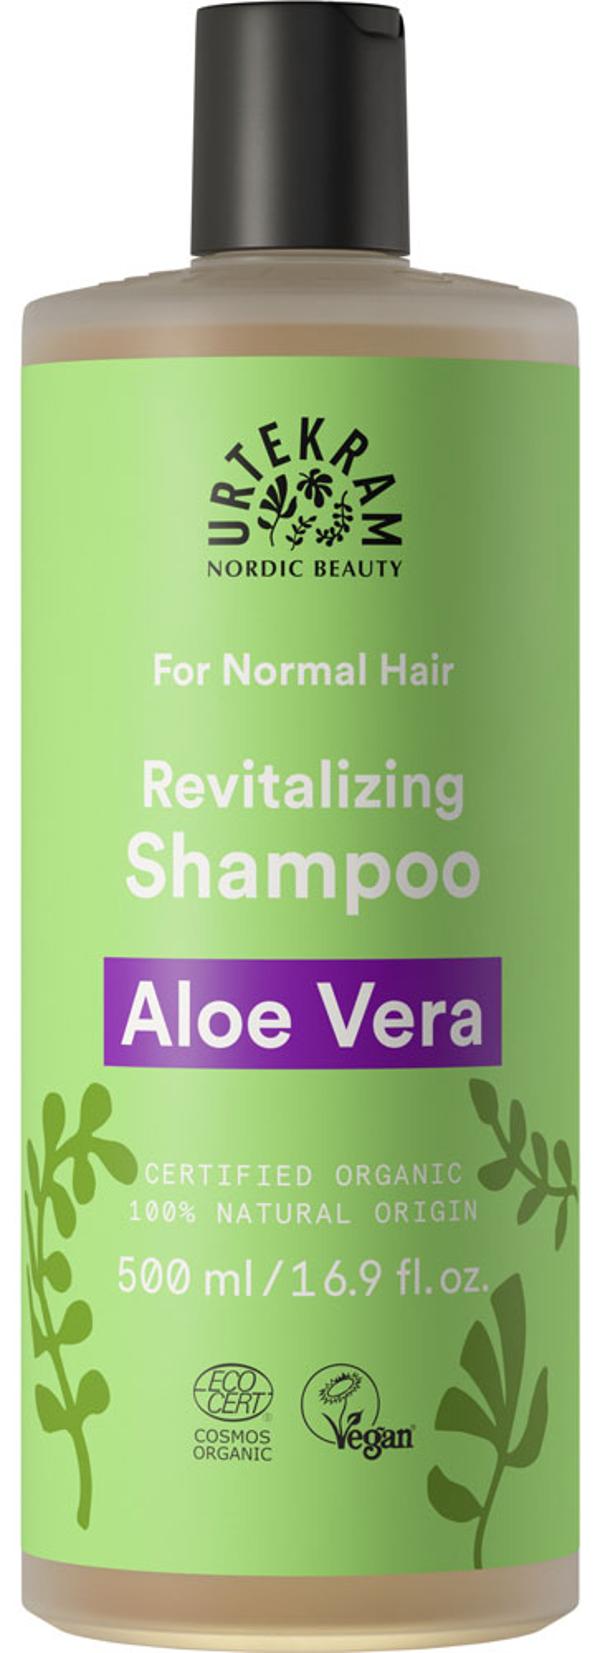 Produktfoto zu Urtekram Aloe Vera Shampoo normales Haar 500ml